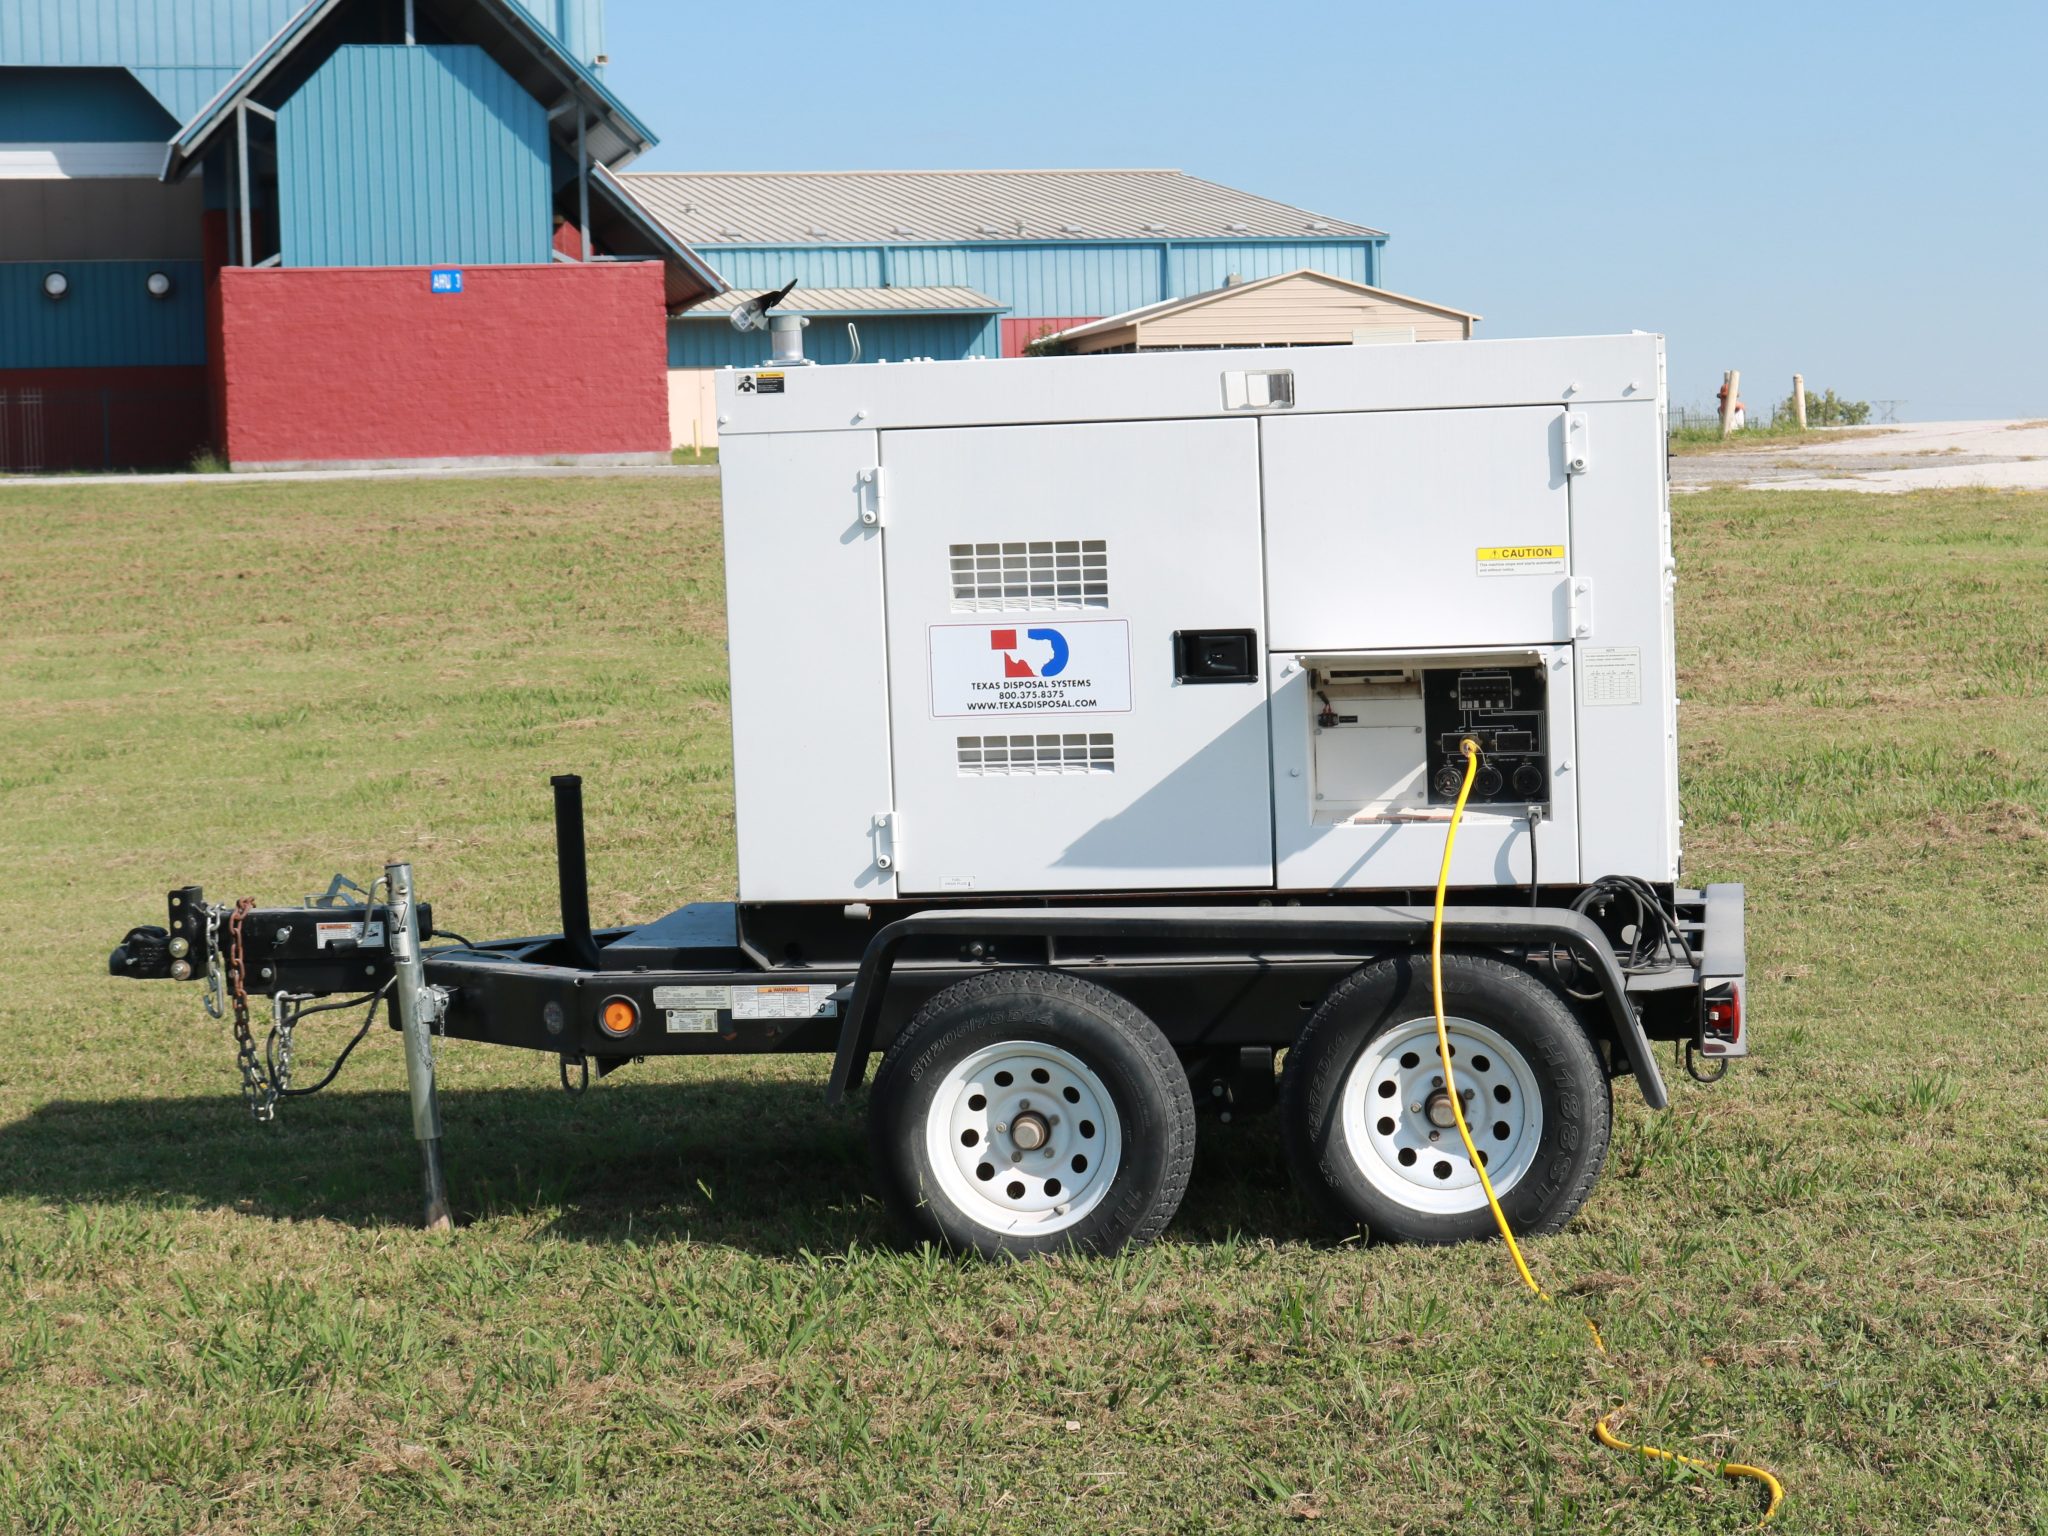 Generator on grassy field